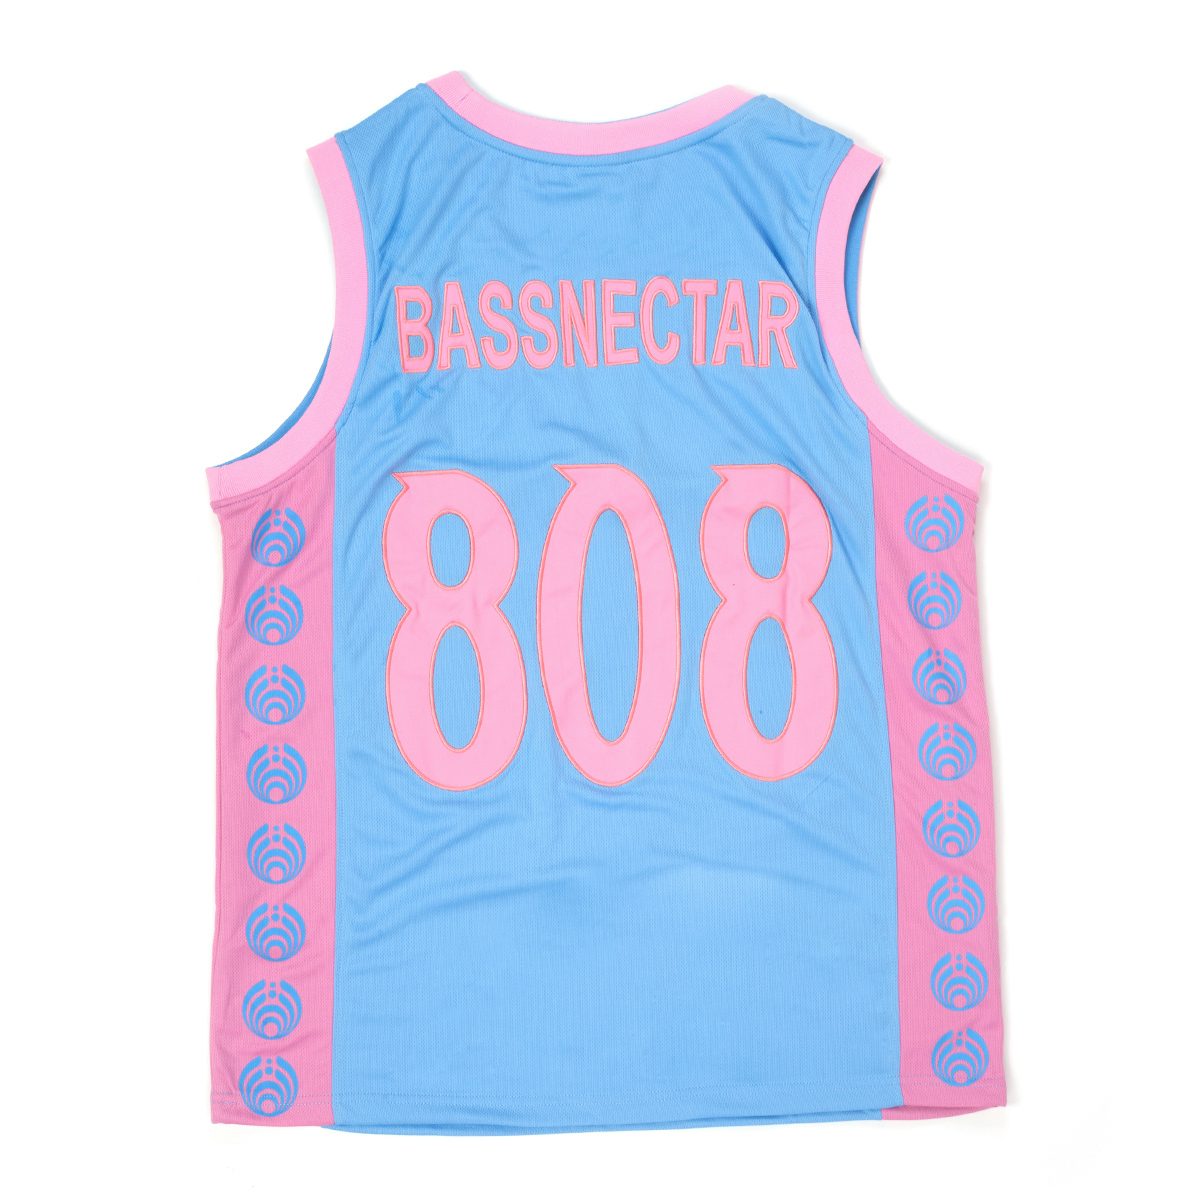 Bassnectar Bassdrop 808 Basketball 